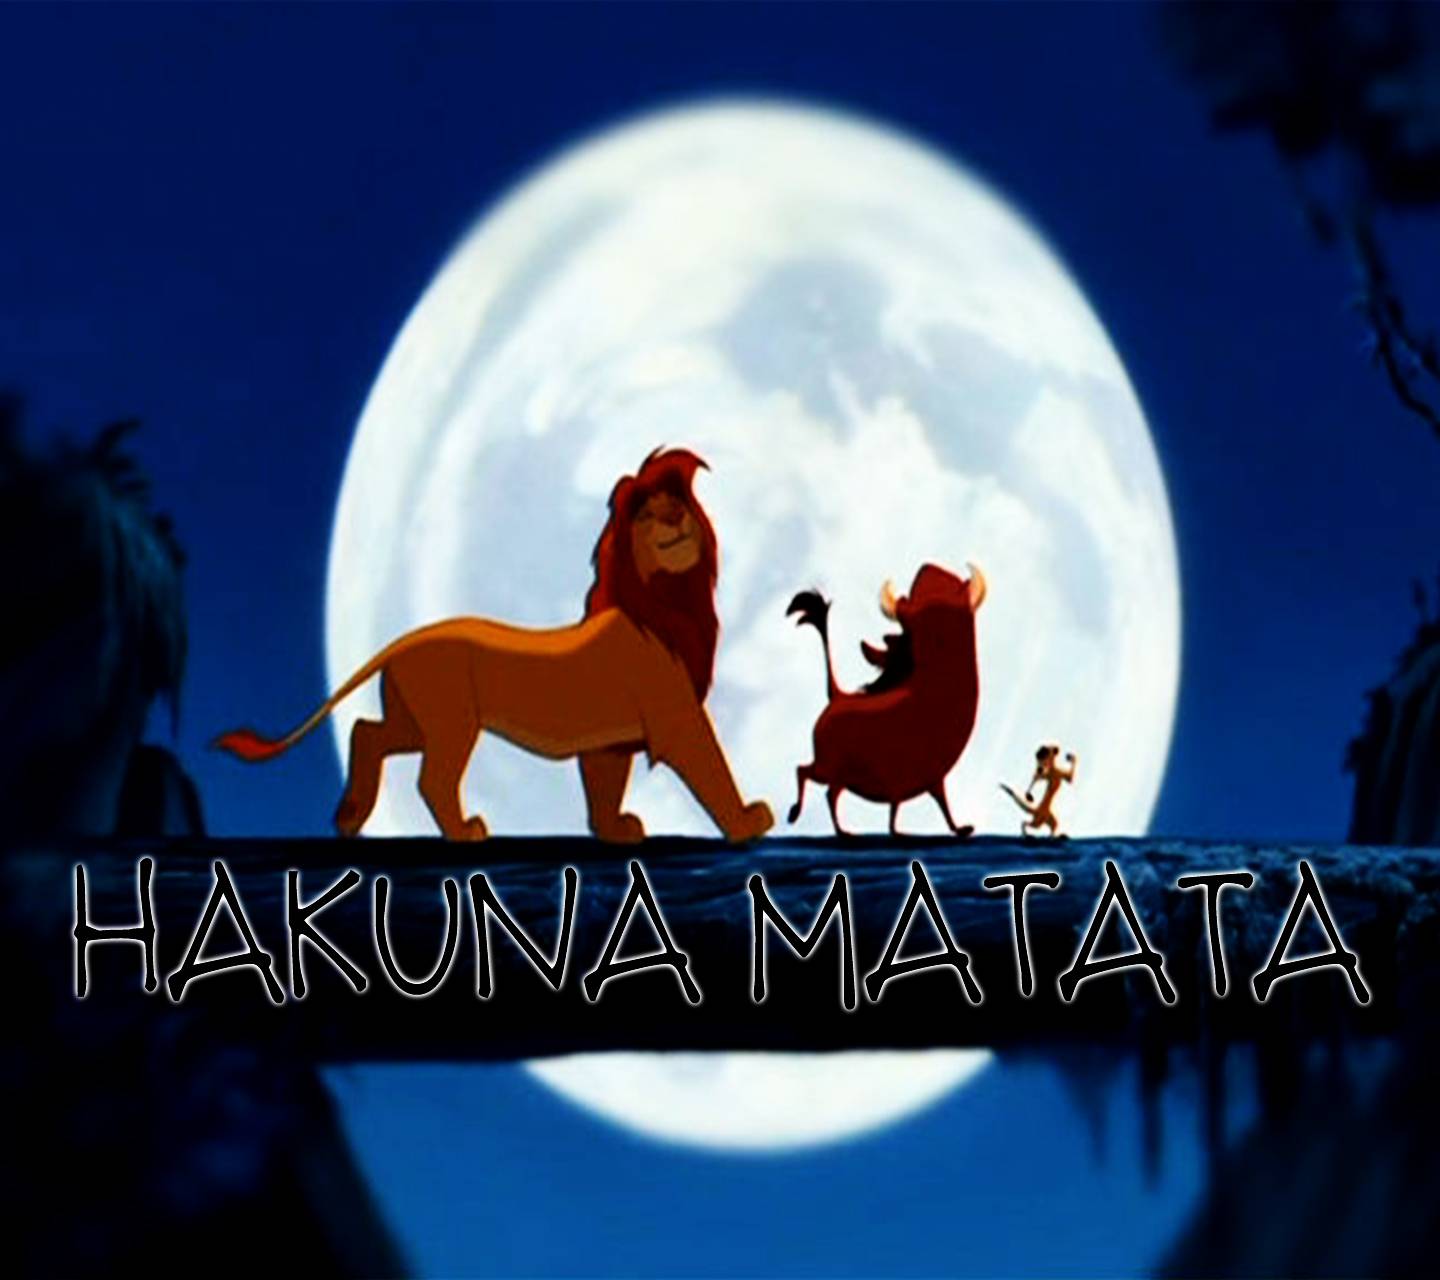 Download free hakuna matata wallpaper for your mobile phone